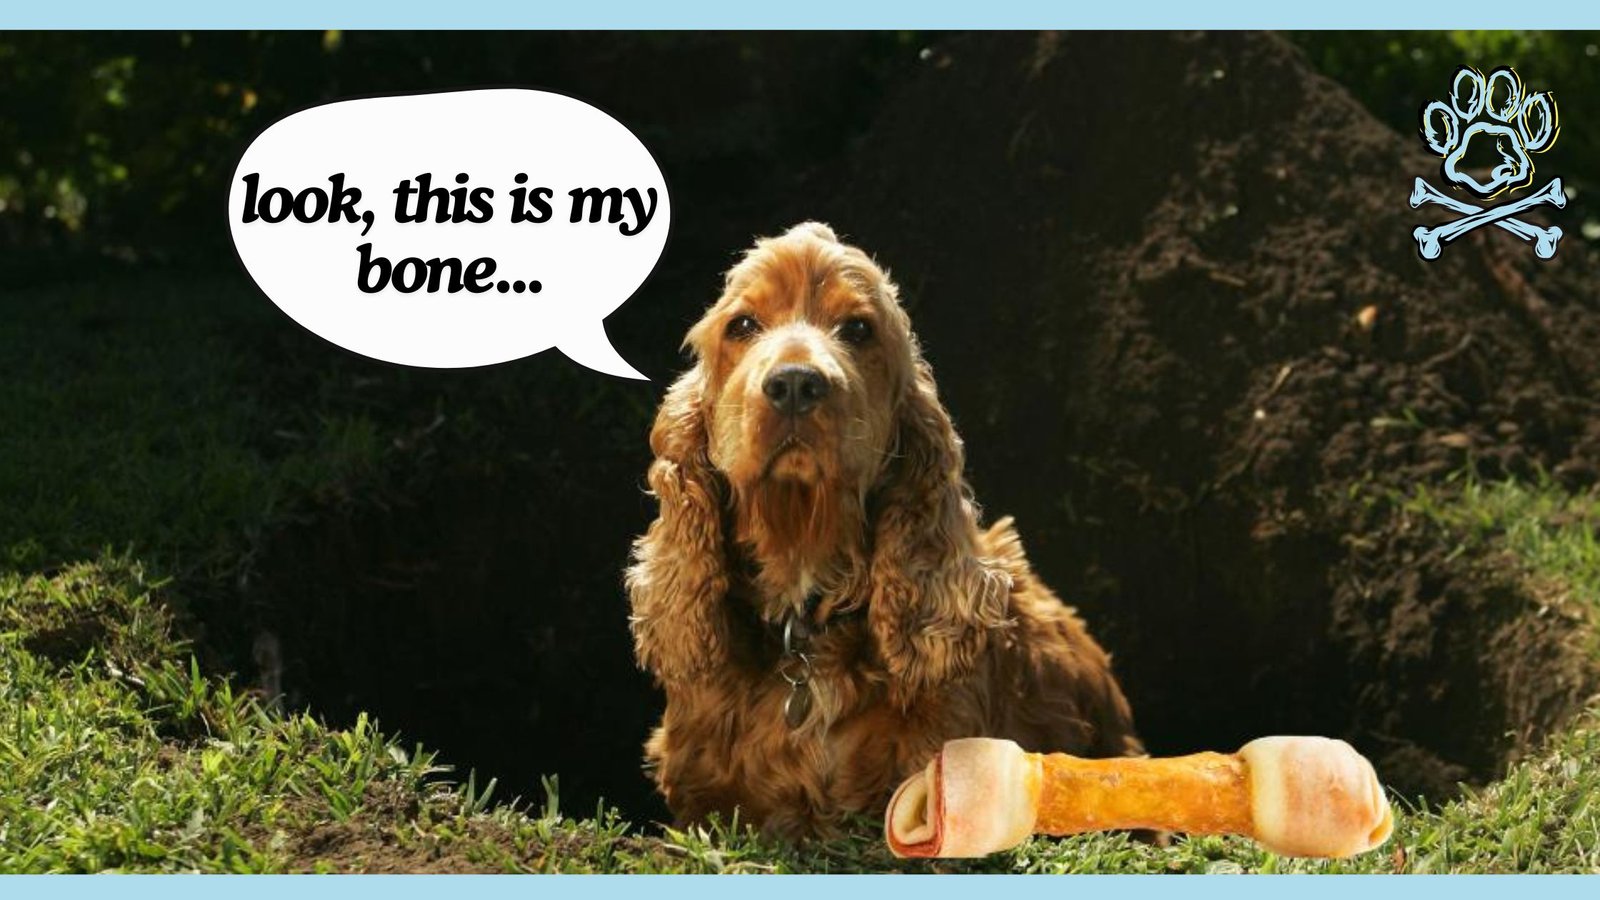 dog show his bone